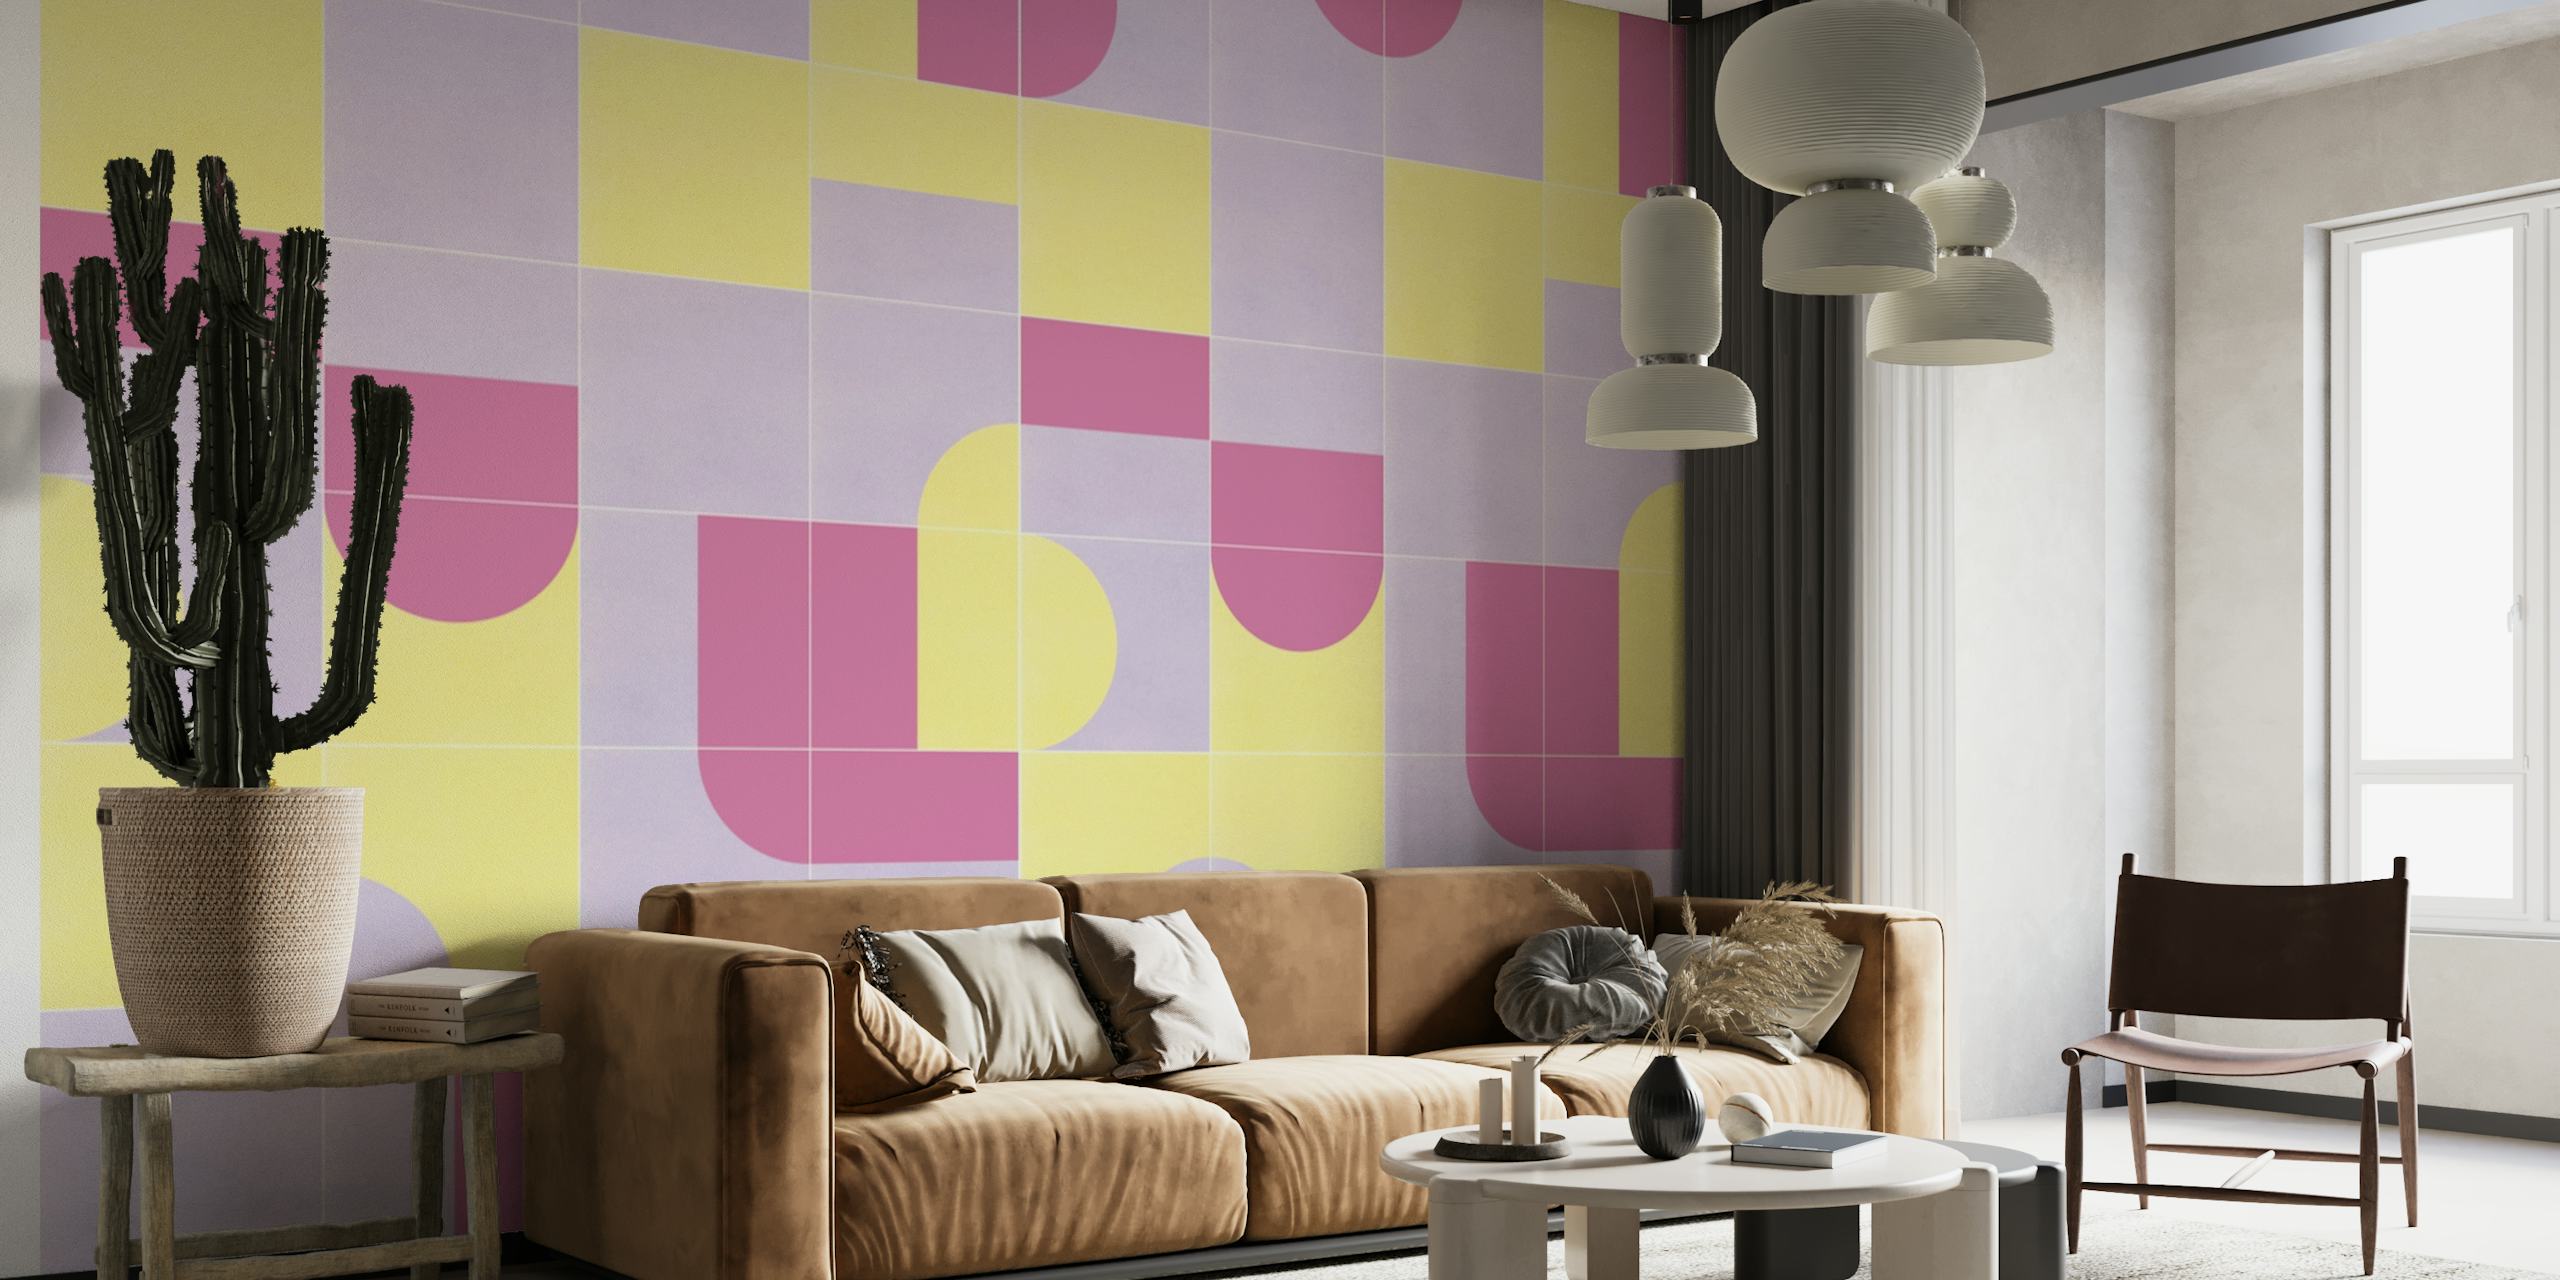 Fotomural vinílico de parede de formas geométricas pastel estilo vintage